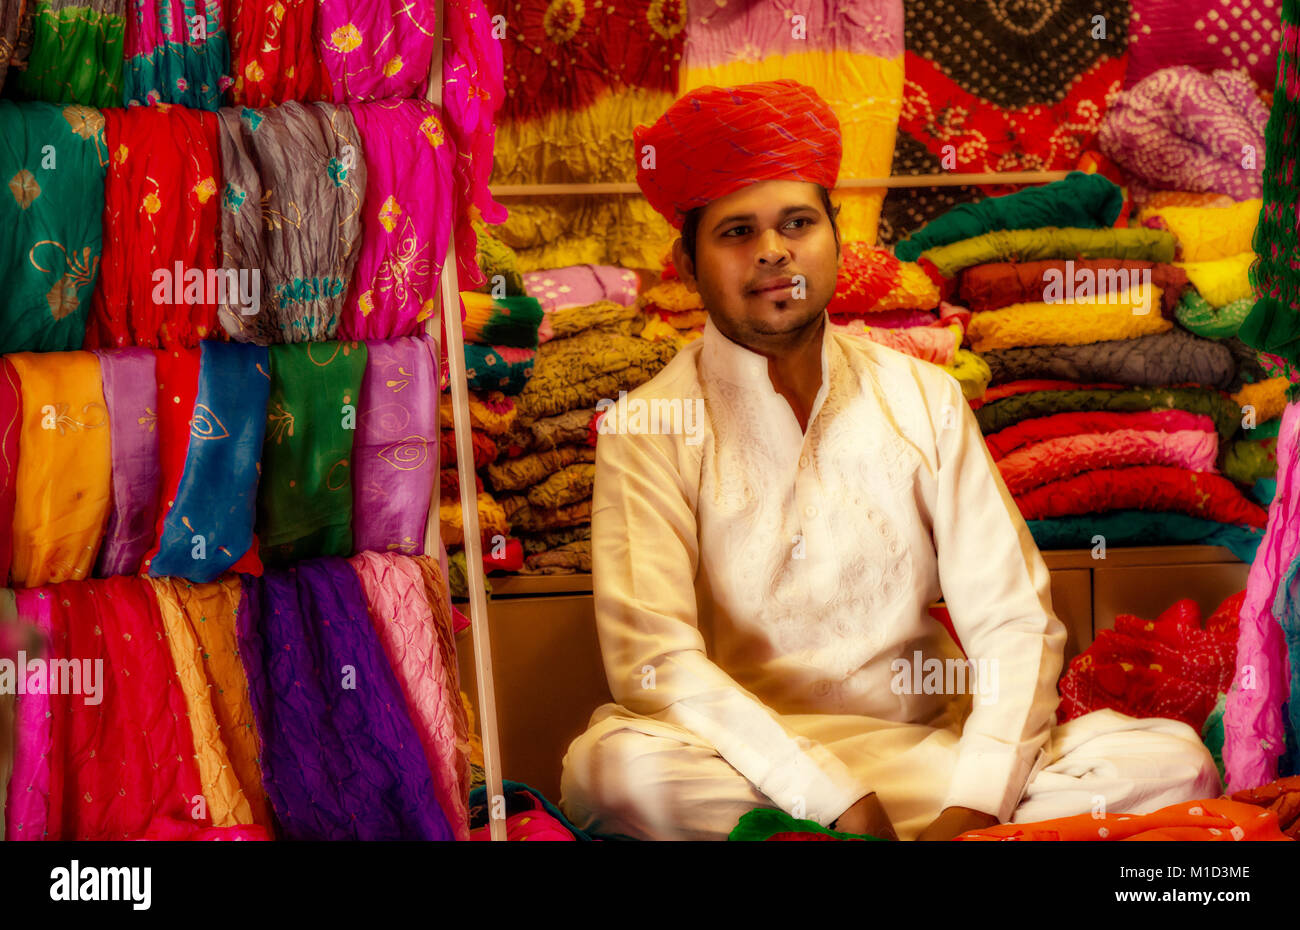 Young Rajasthani male wearing traditional dress selling Rajasthan dress materials at Mehrangarh Fort, Jodhpur Rajasthan India. Stock Photo